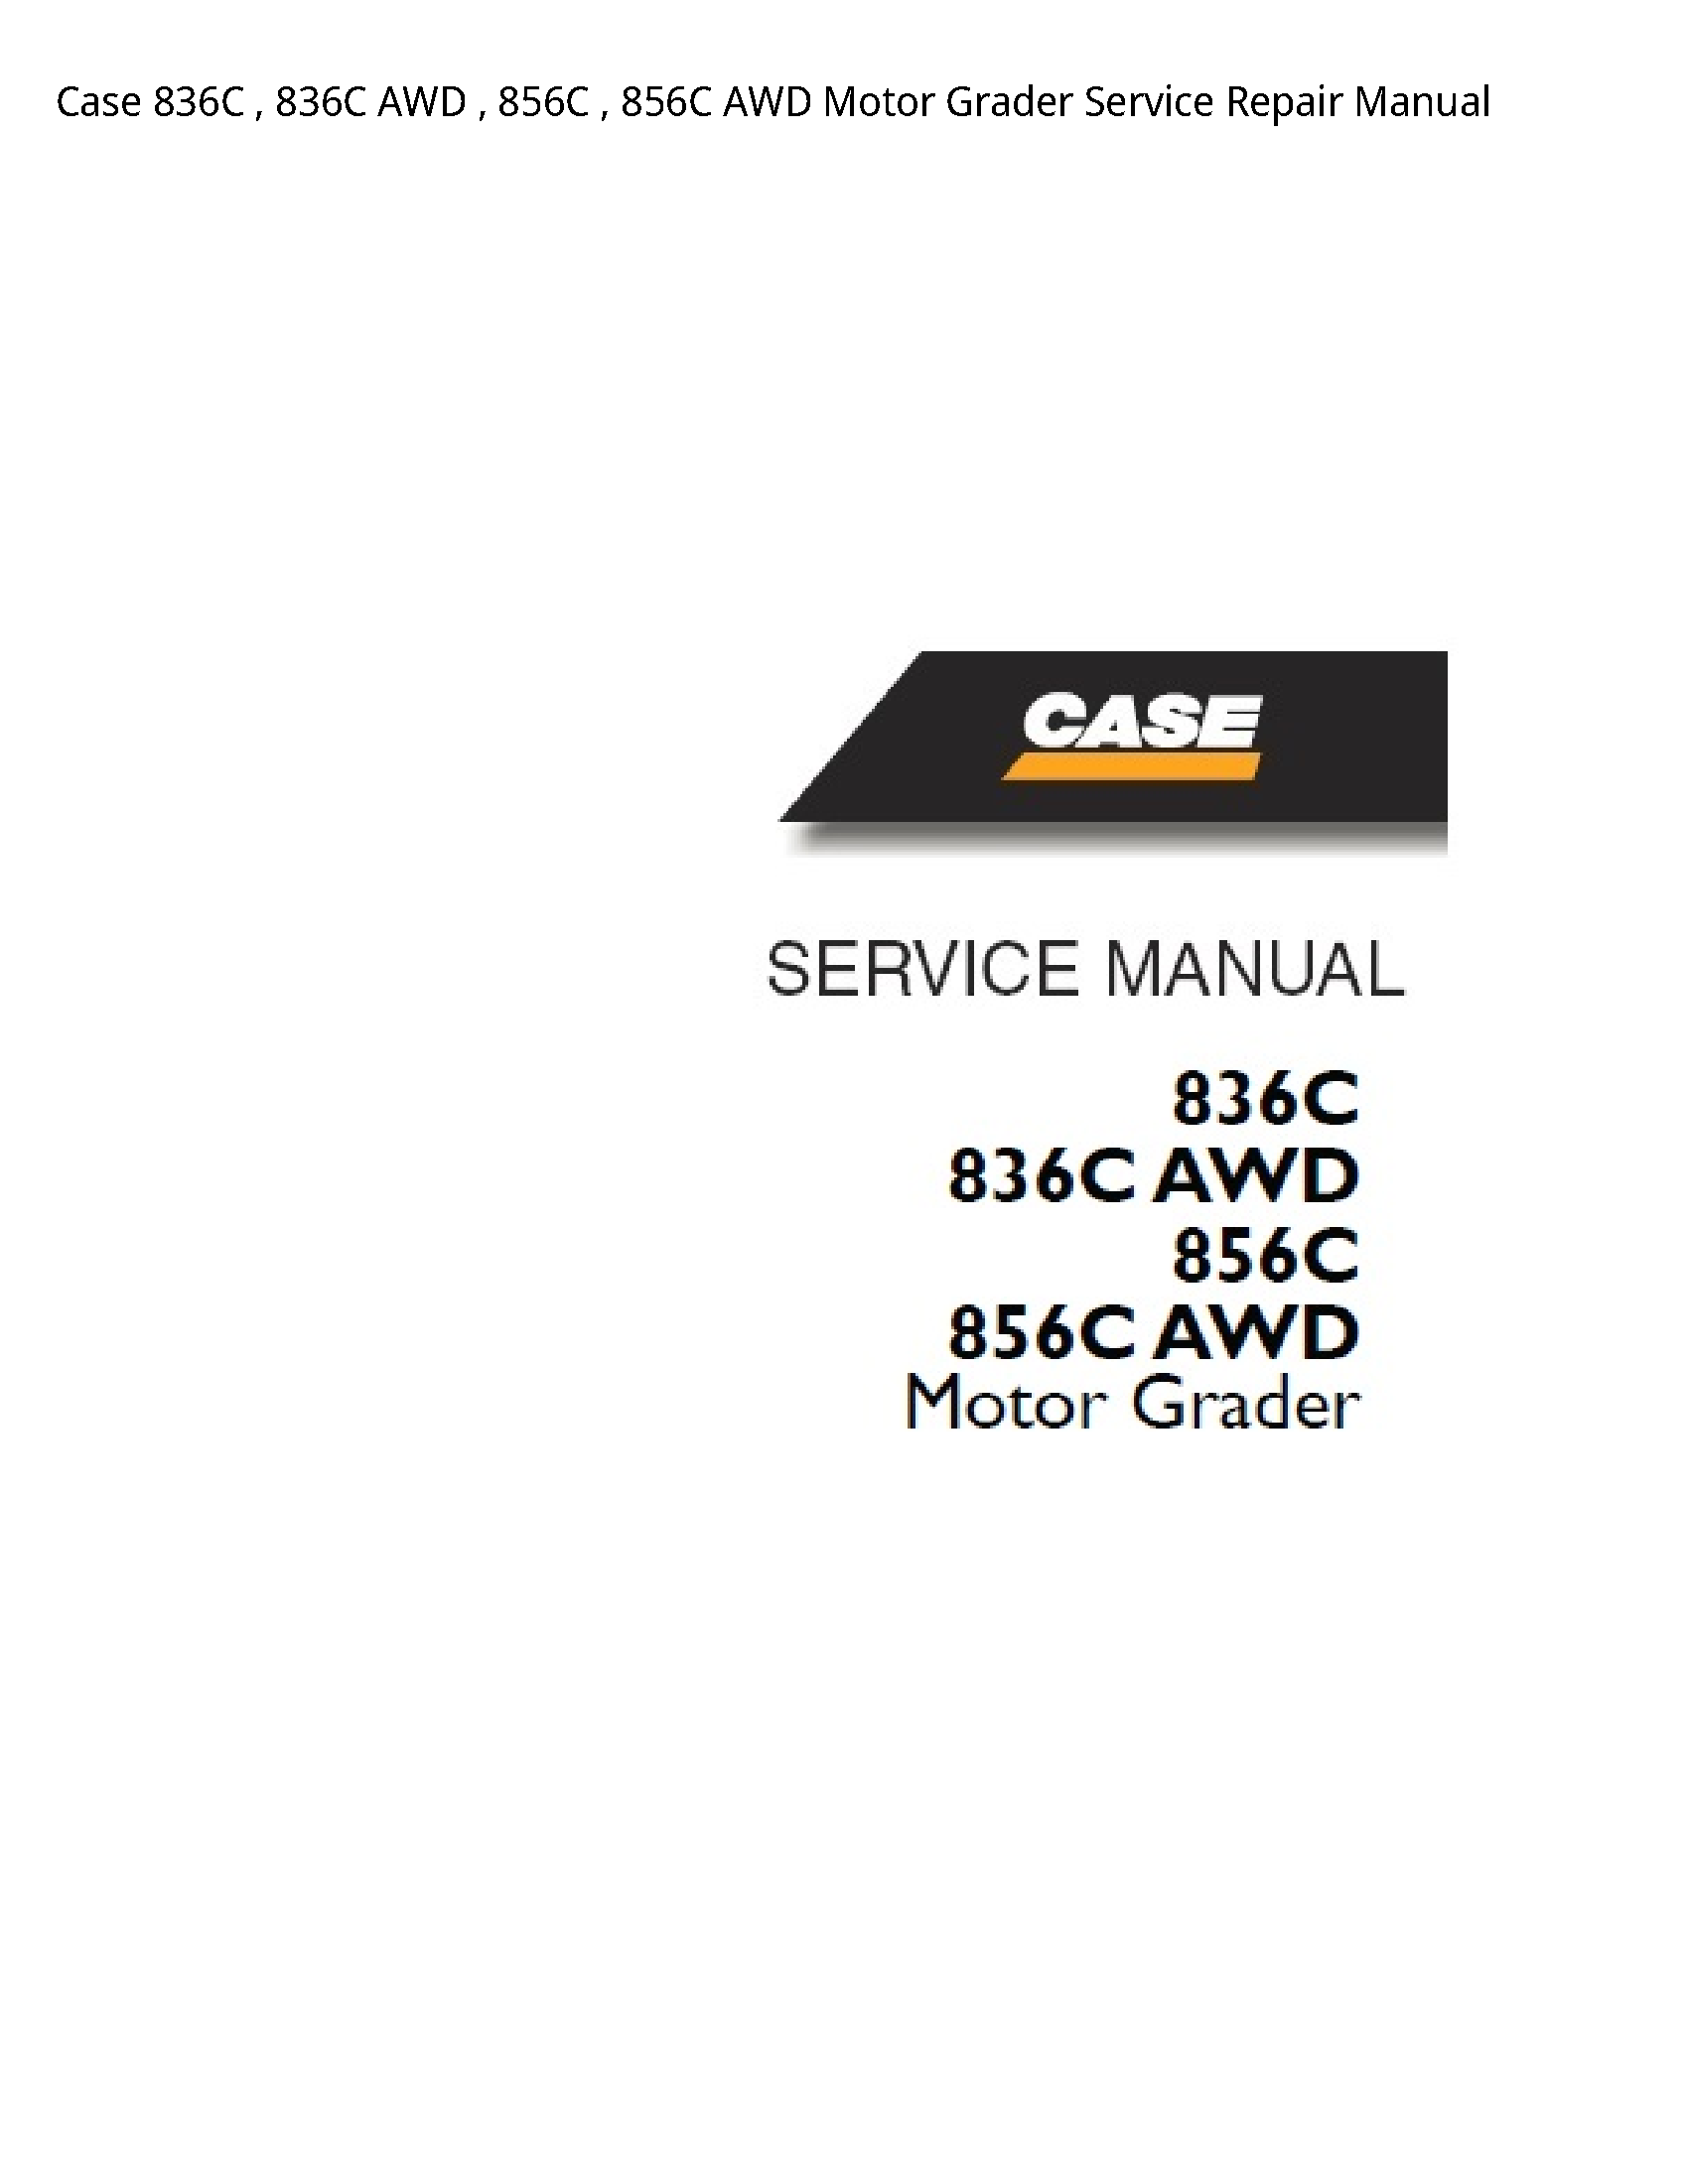 Case/Case IH 836C AWD AWD Motor Grader manual